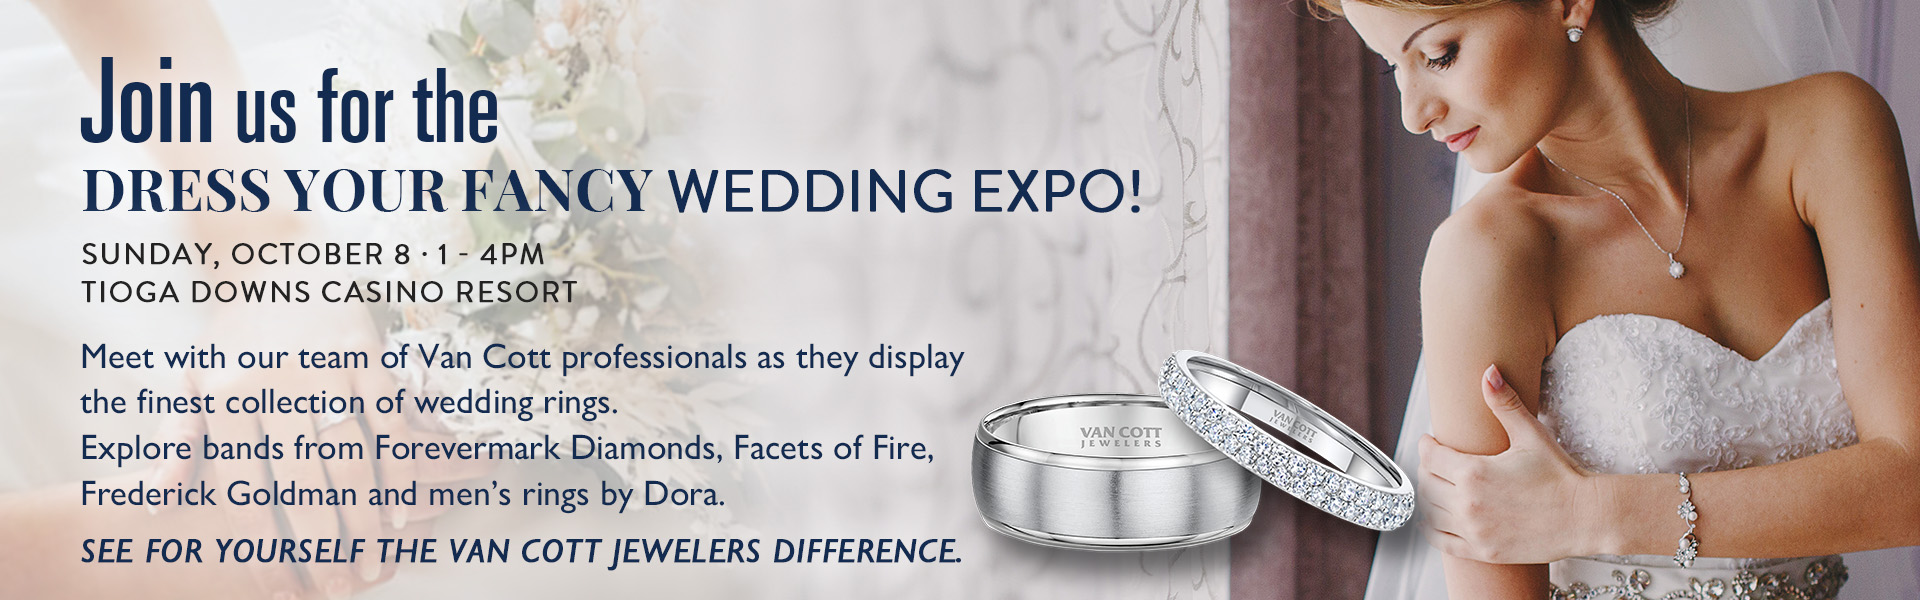 Dress Your Fancy Wedding Expo